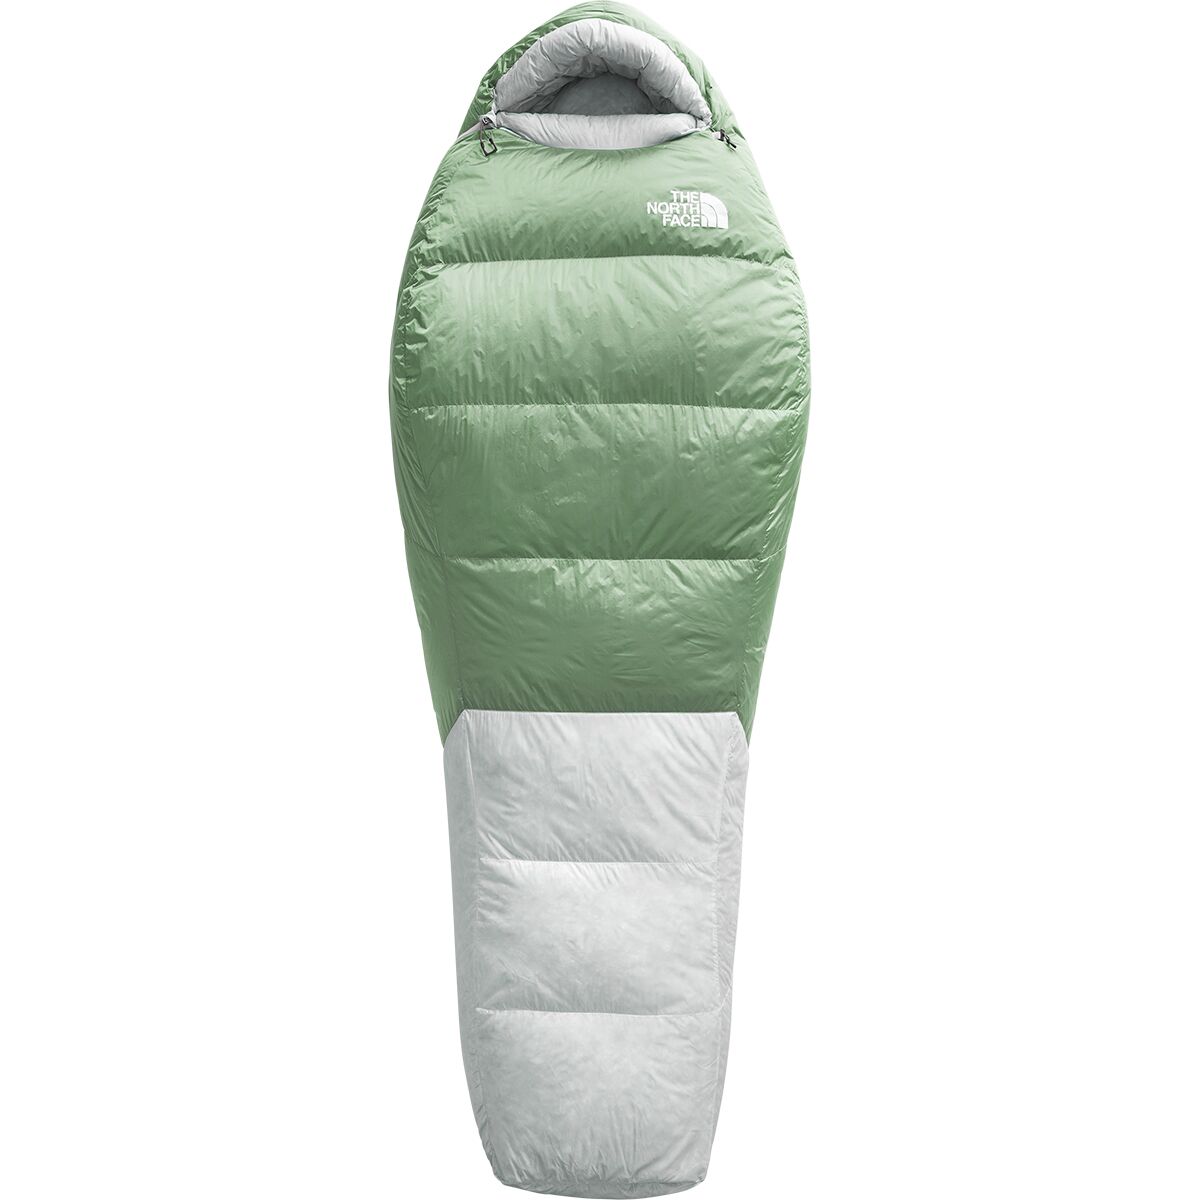 The North Face Green Kazoo Sleeping Bag: 0F Down